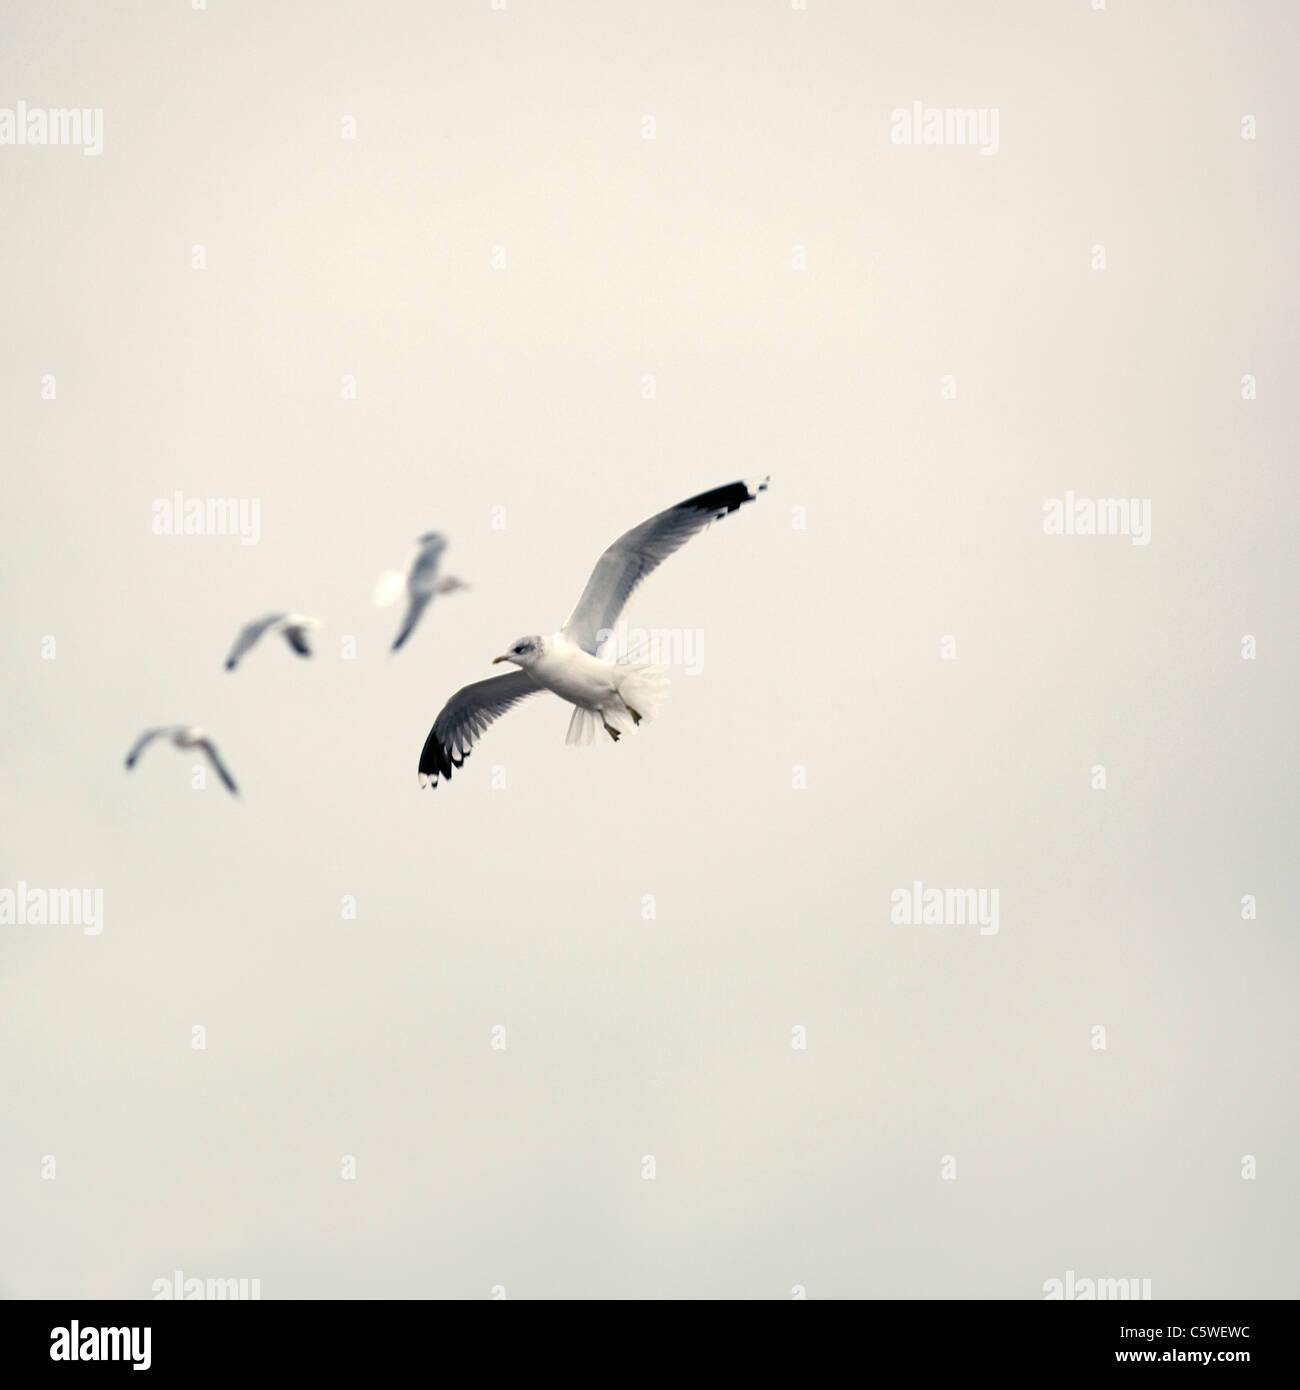 Germany, Sankt Peter Ording, Seagulls in flight Stock Photo